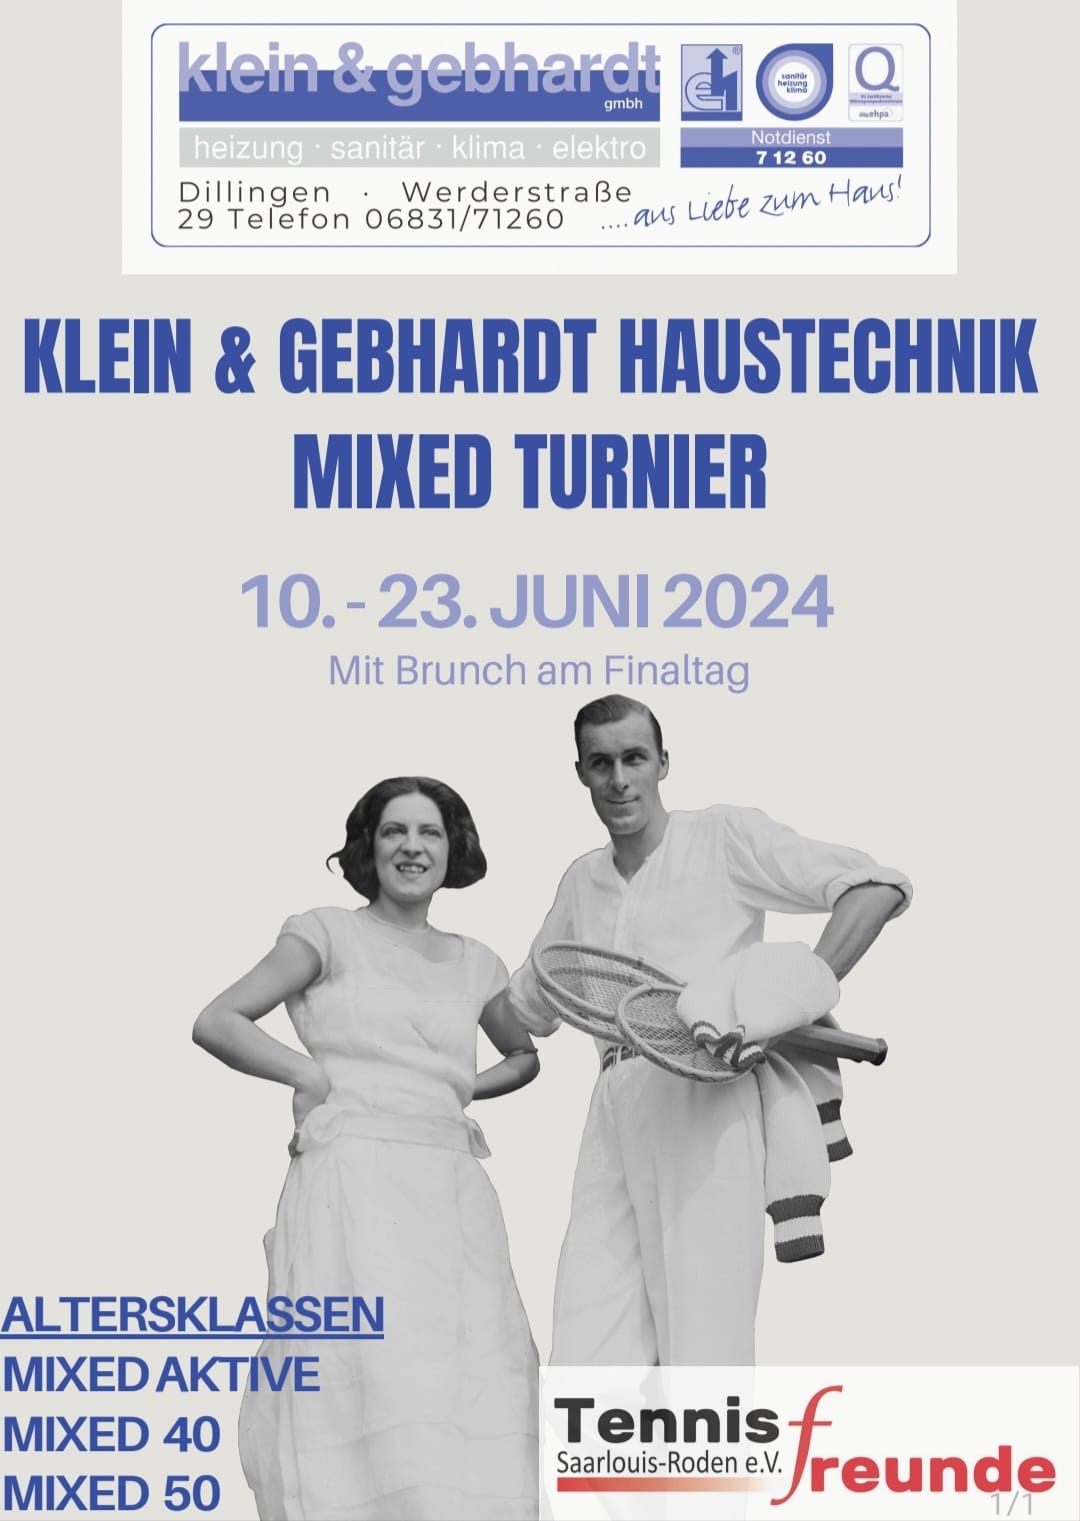 Klein & Gebhardt Haustechnik Mixed Turnier 10. - 23.06.2024